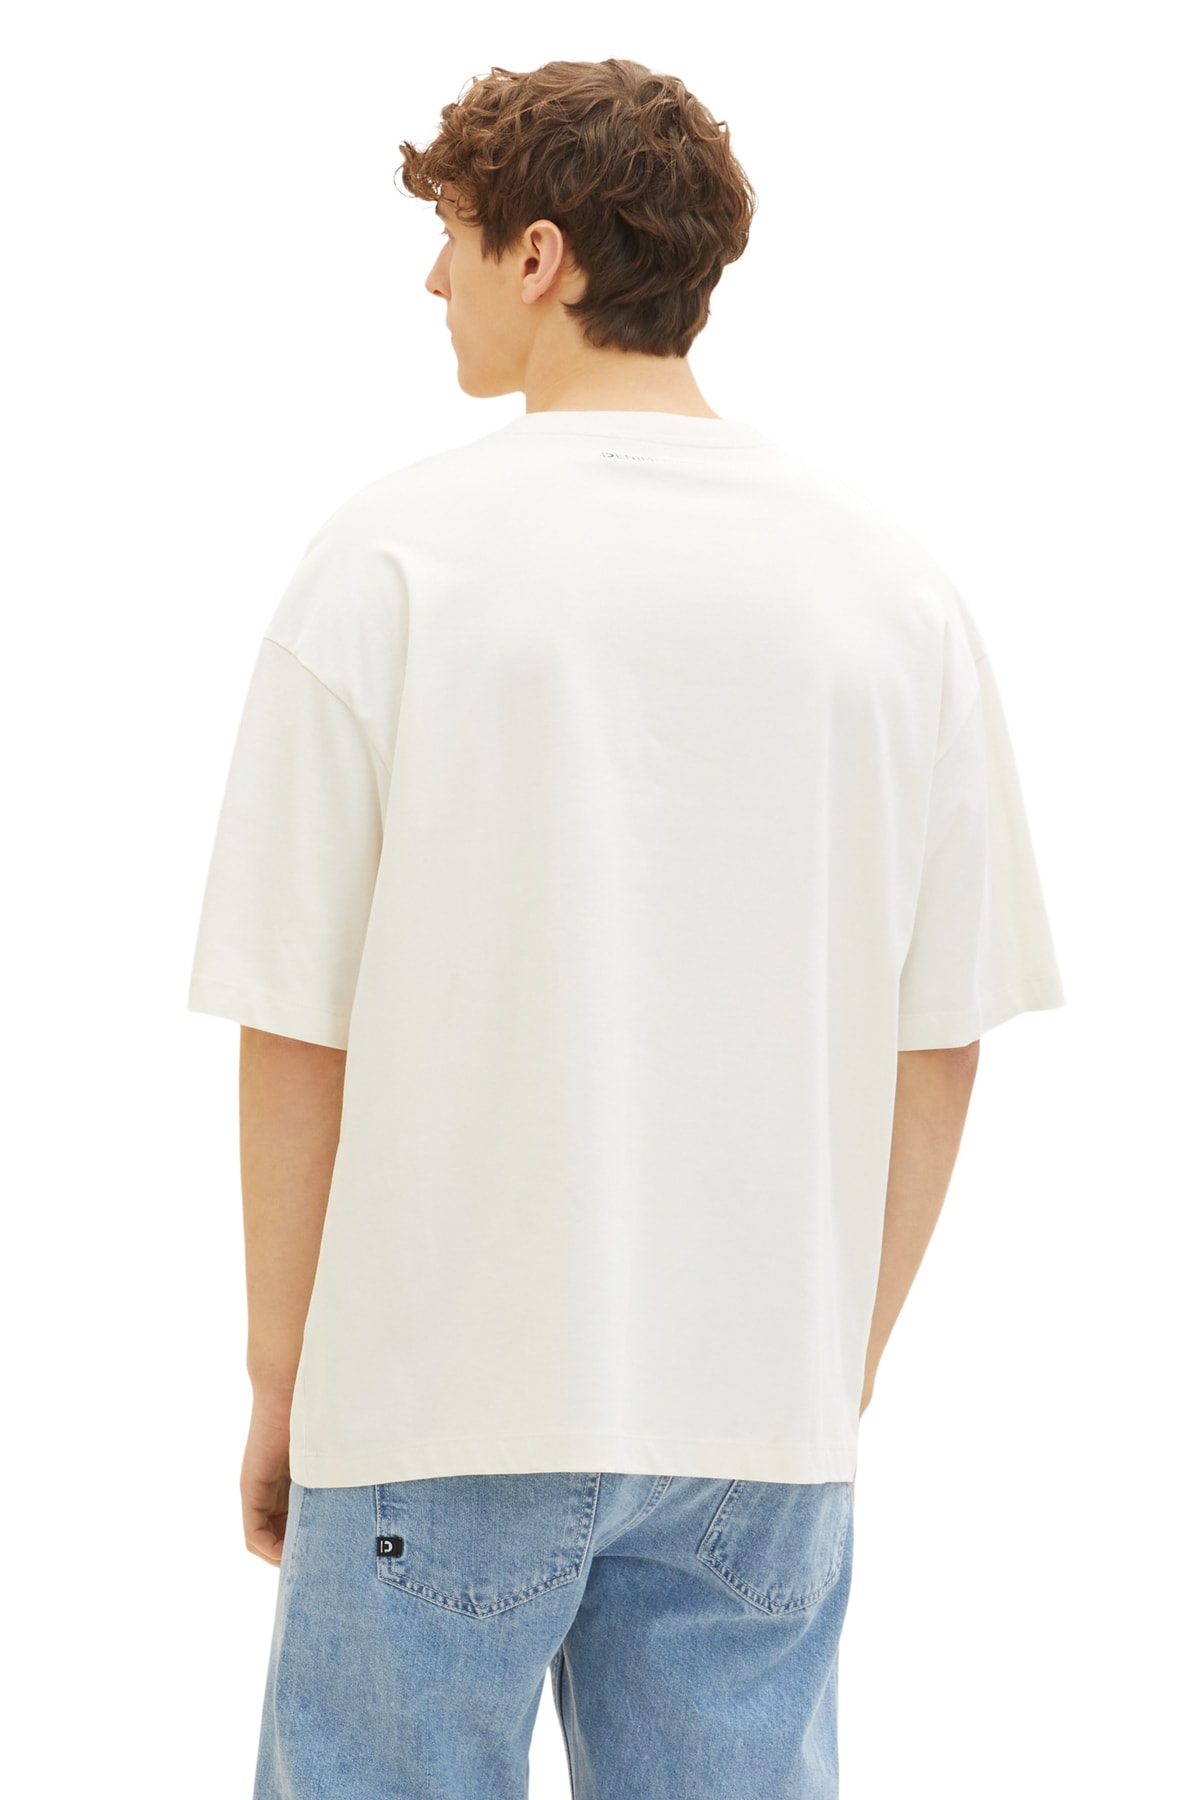 Tom Tailor Denim T-Shirt Weiß Regular Fit QV7251